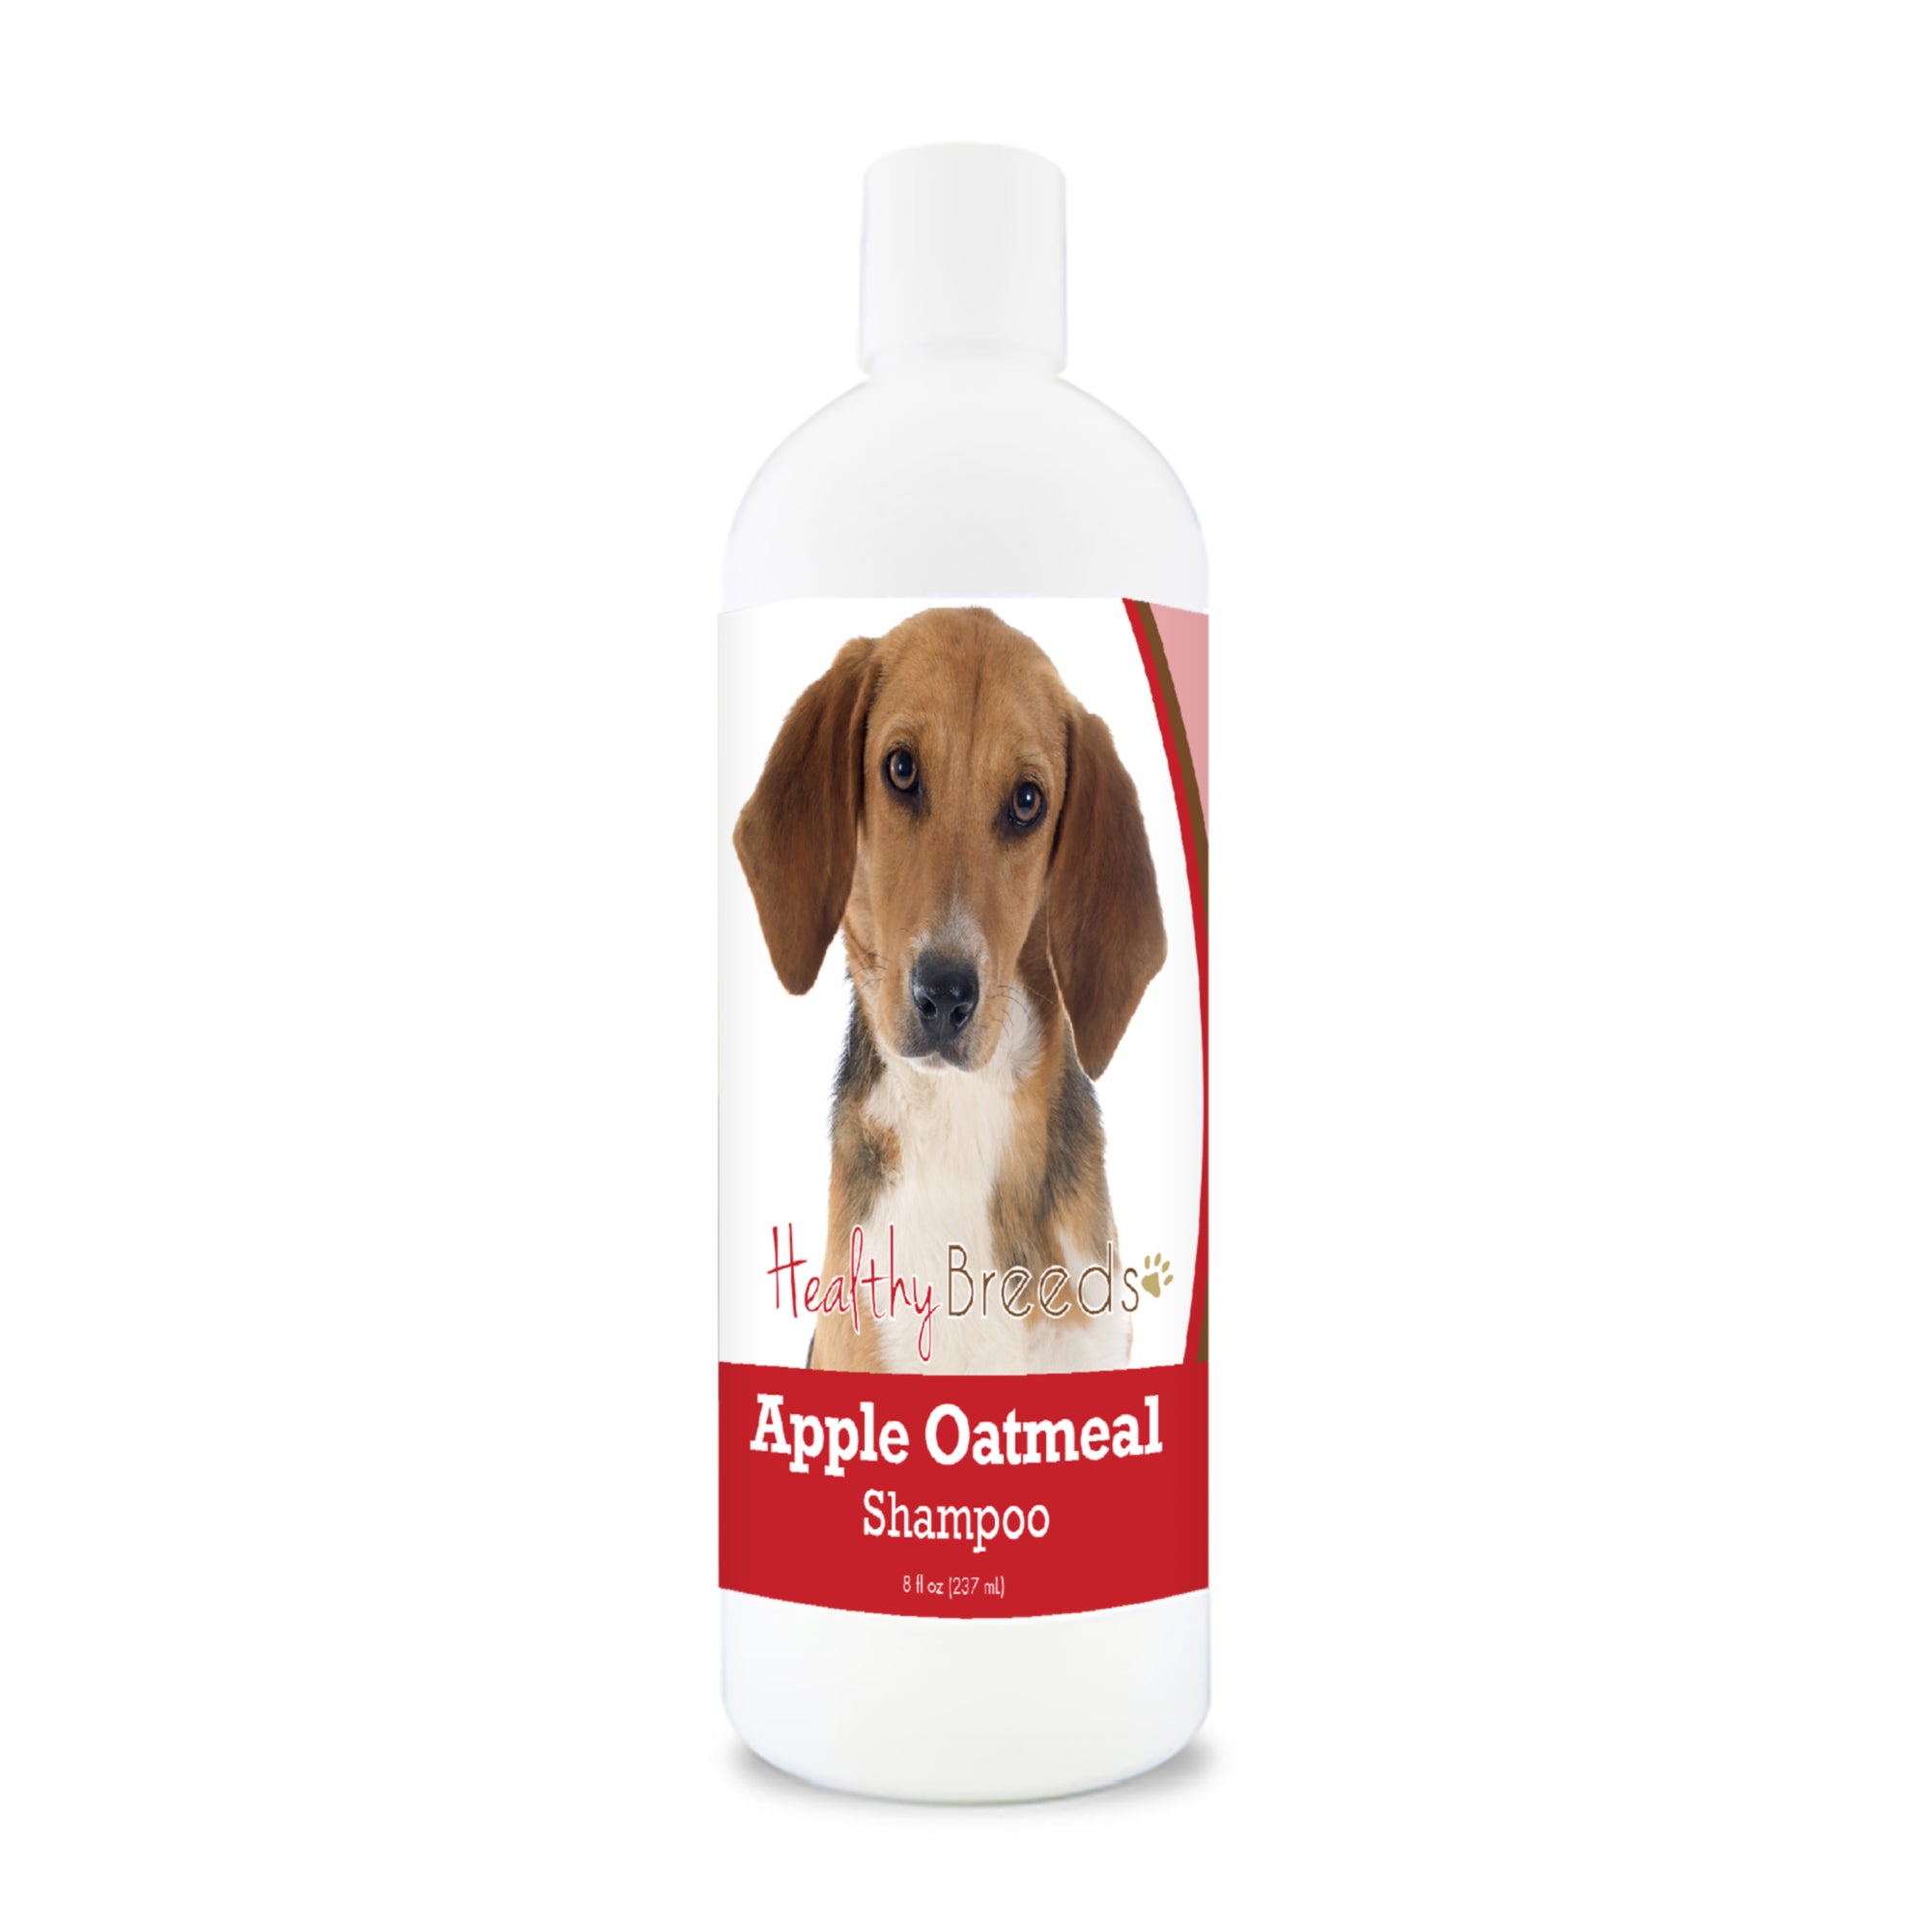 Harrier Apple Oatmeal Shampoo 8 oz